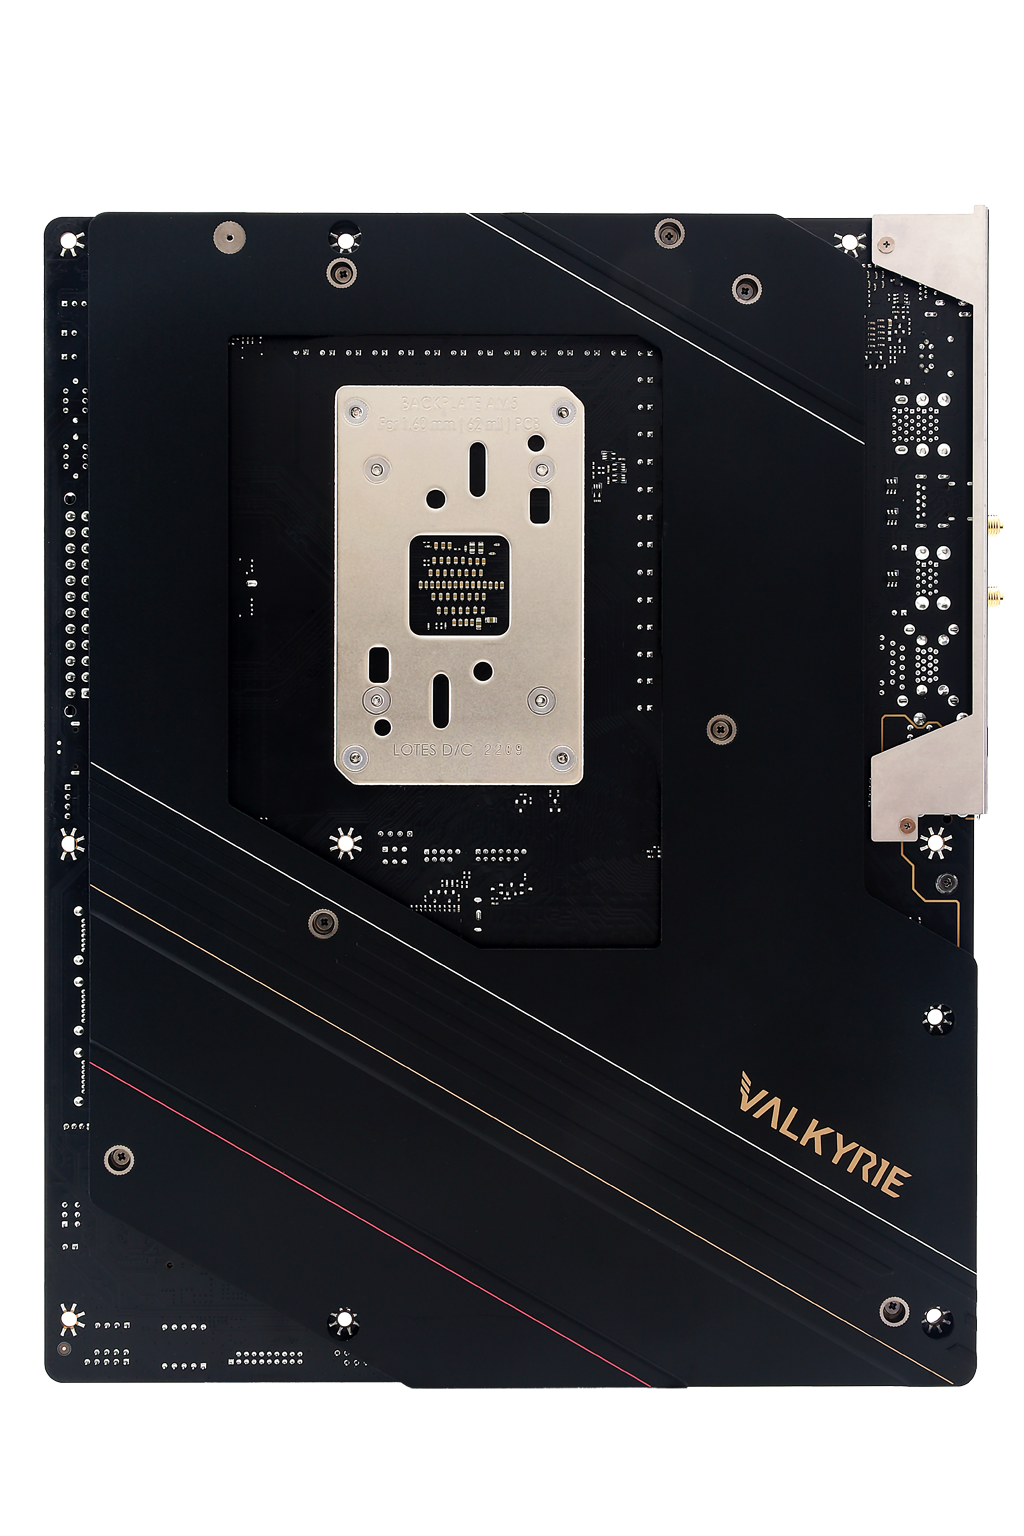 X670E VALKYRIE AMD Socket AM5 gaming motherboard